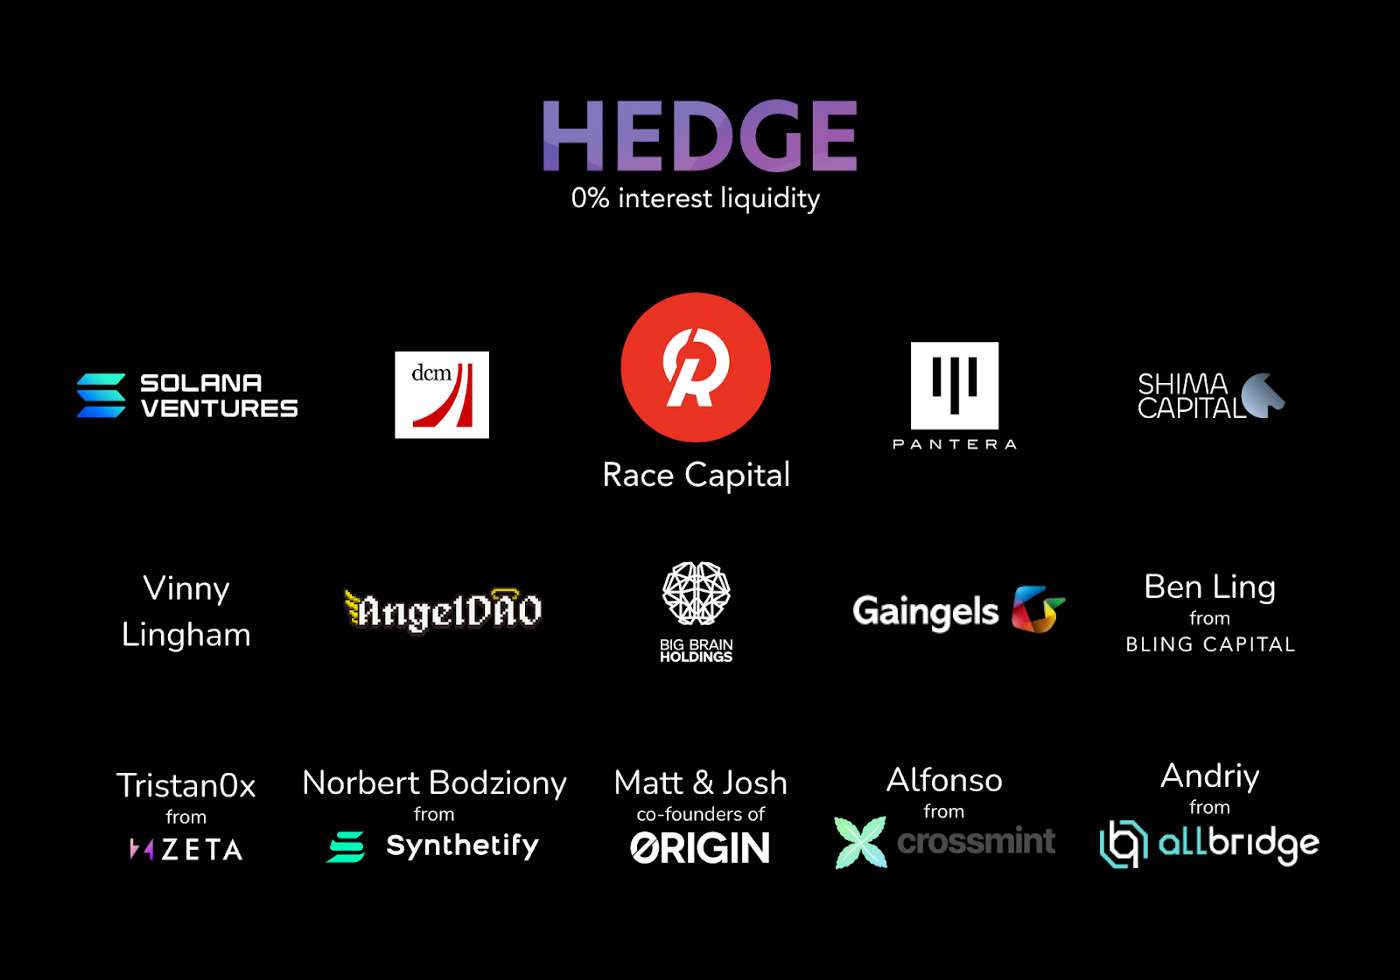 Investors of Hedge